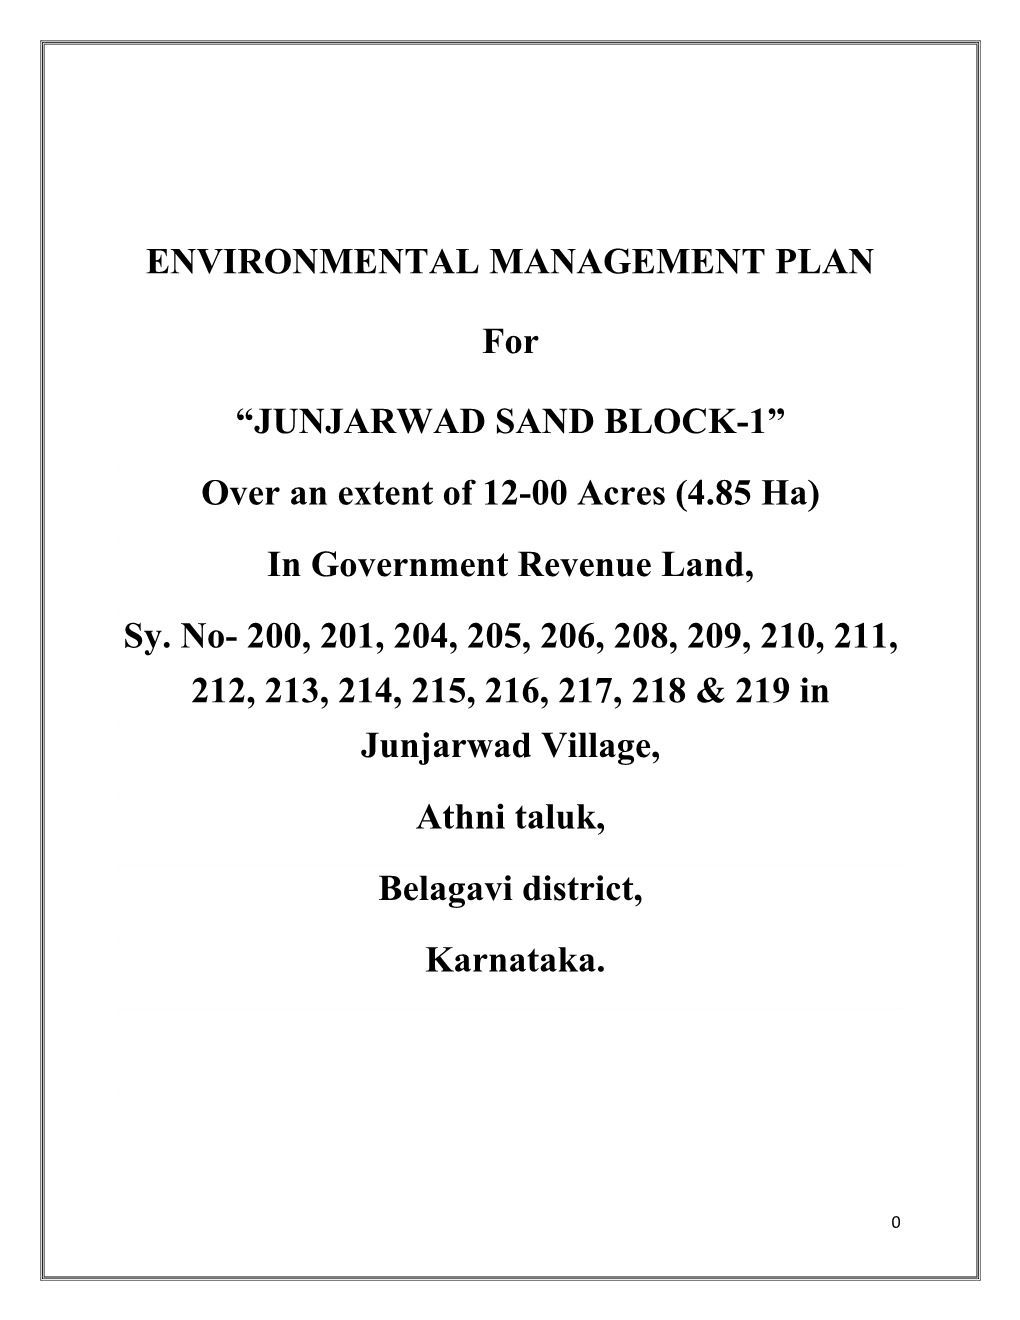 ENVIRONMENTAL MANAGEMENT PLAN for “JUNJARWAD SAND